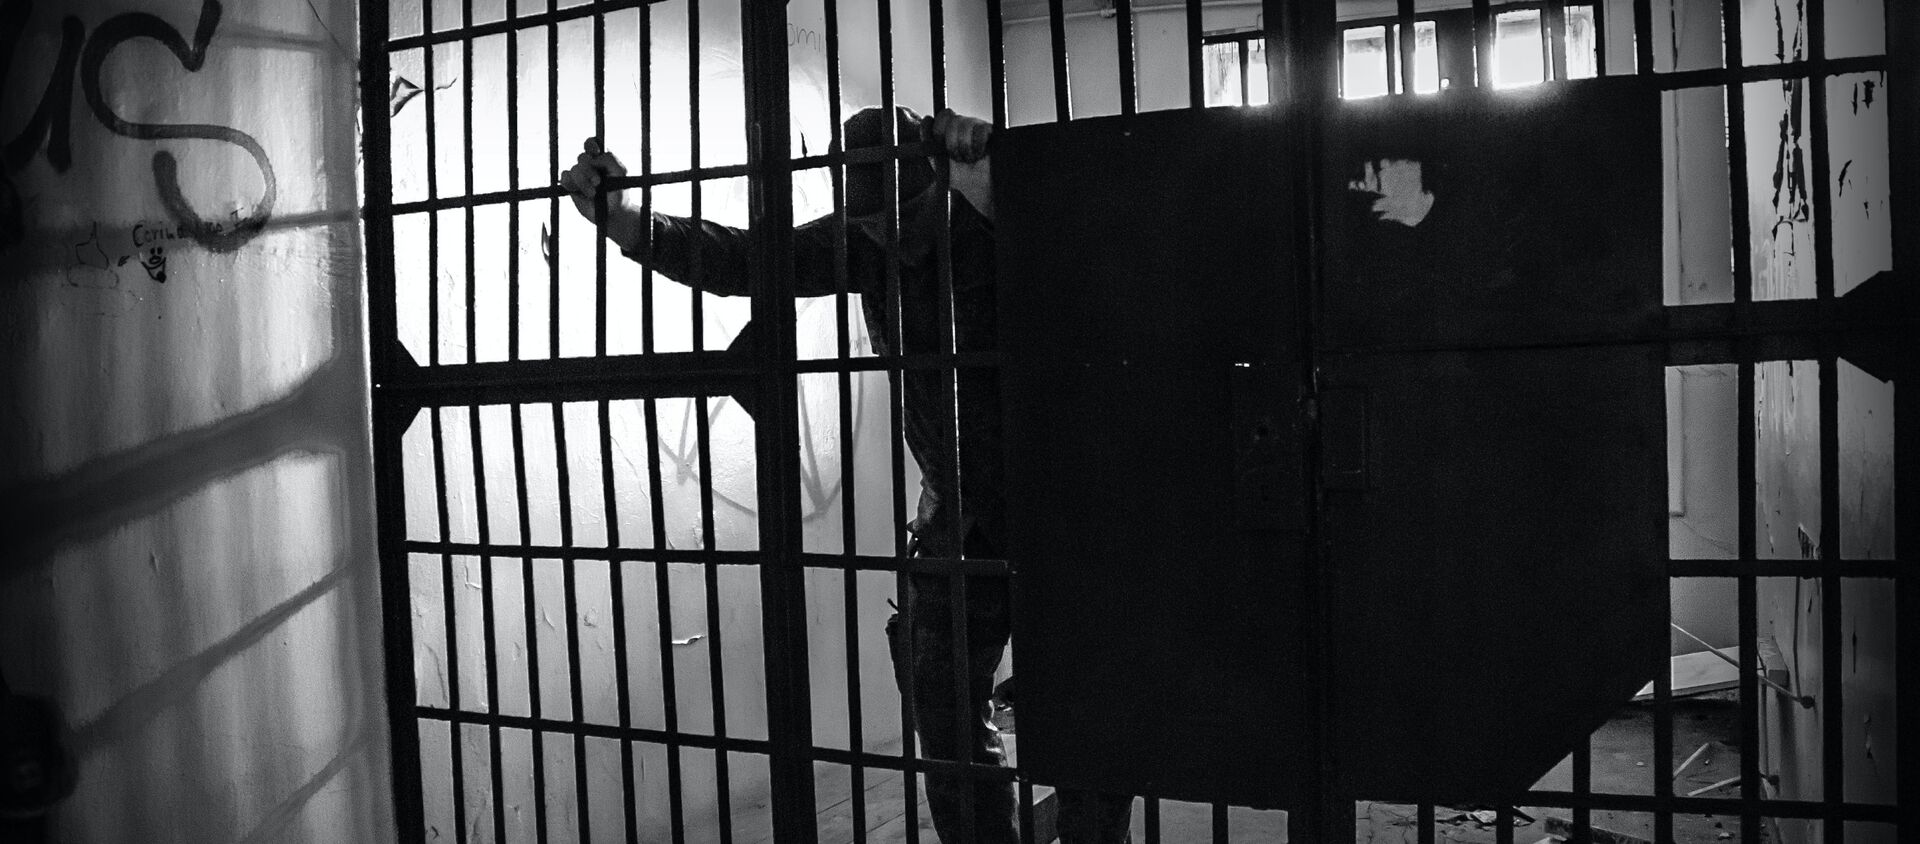 Мужчина за решеткой в тюрьме. Иллюстративное фото - Sputnik Кыргызстан, 1920, 18.03.2021